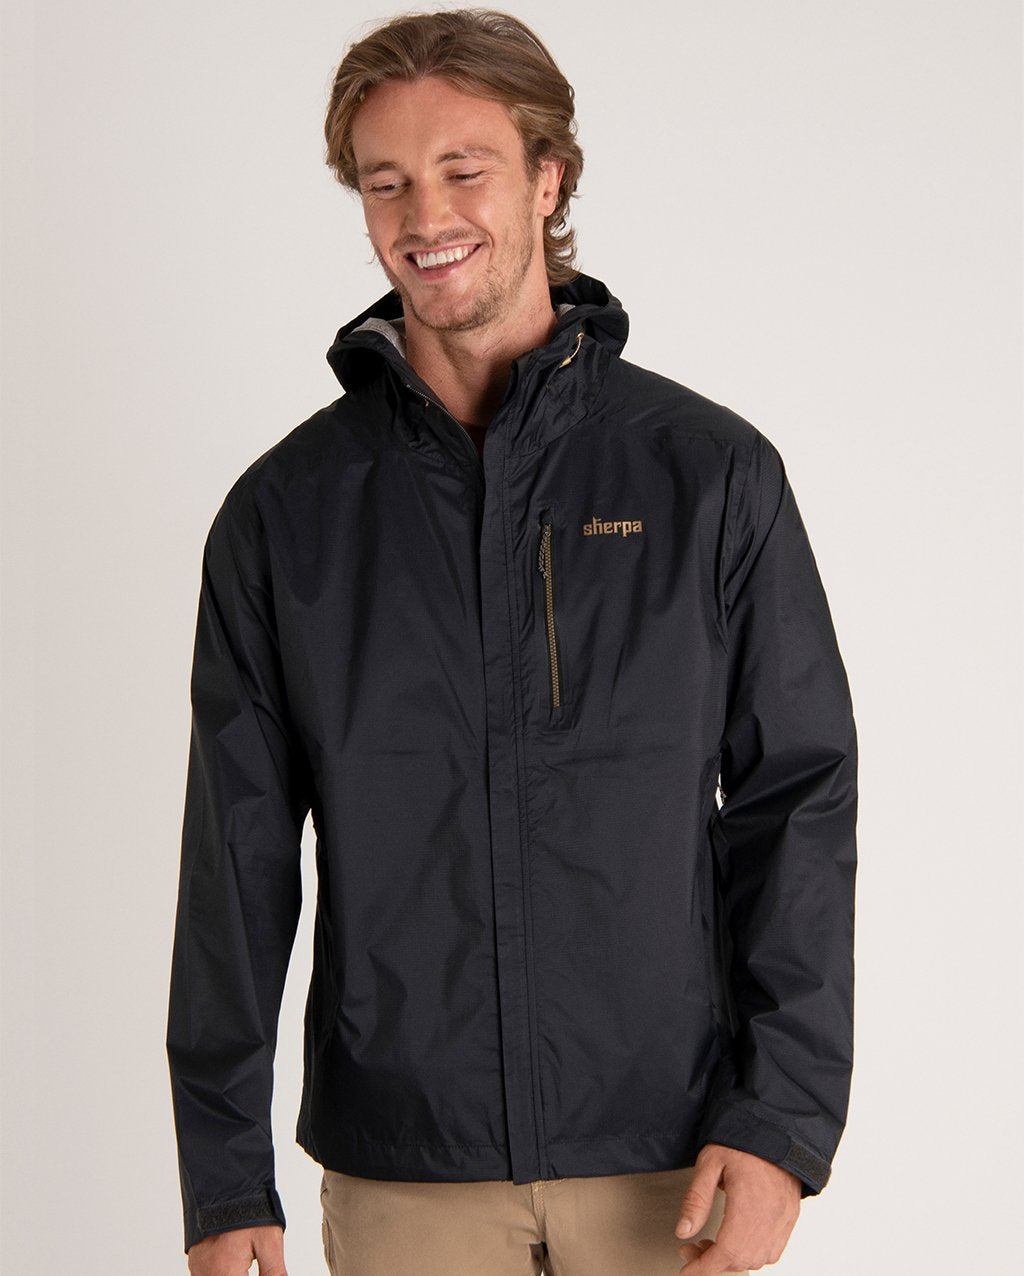 Sherpa Men's Kunde 2.5 Layer Jacket